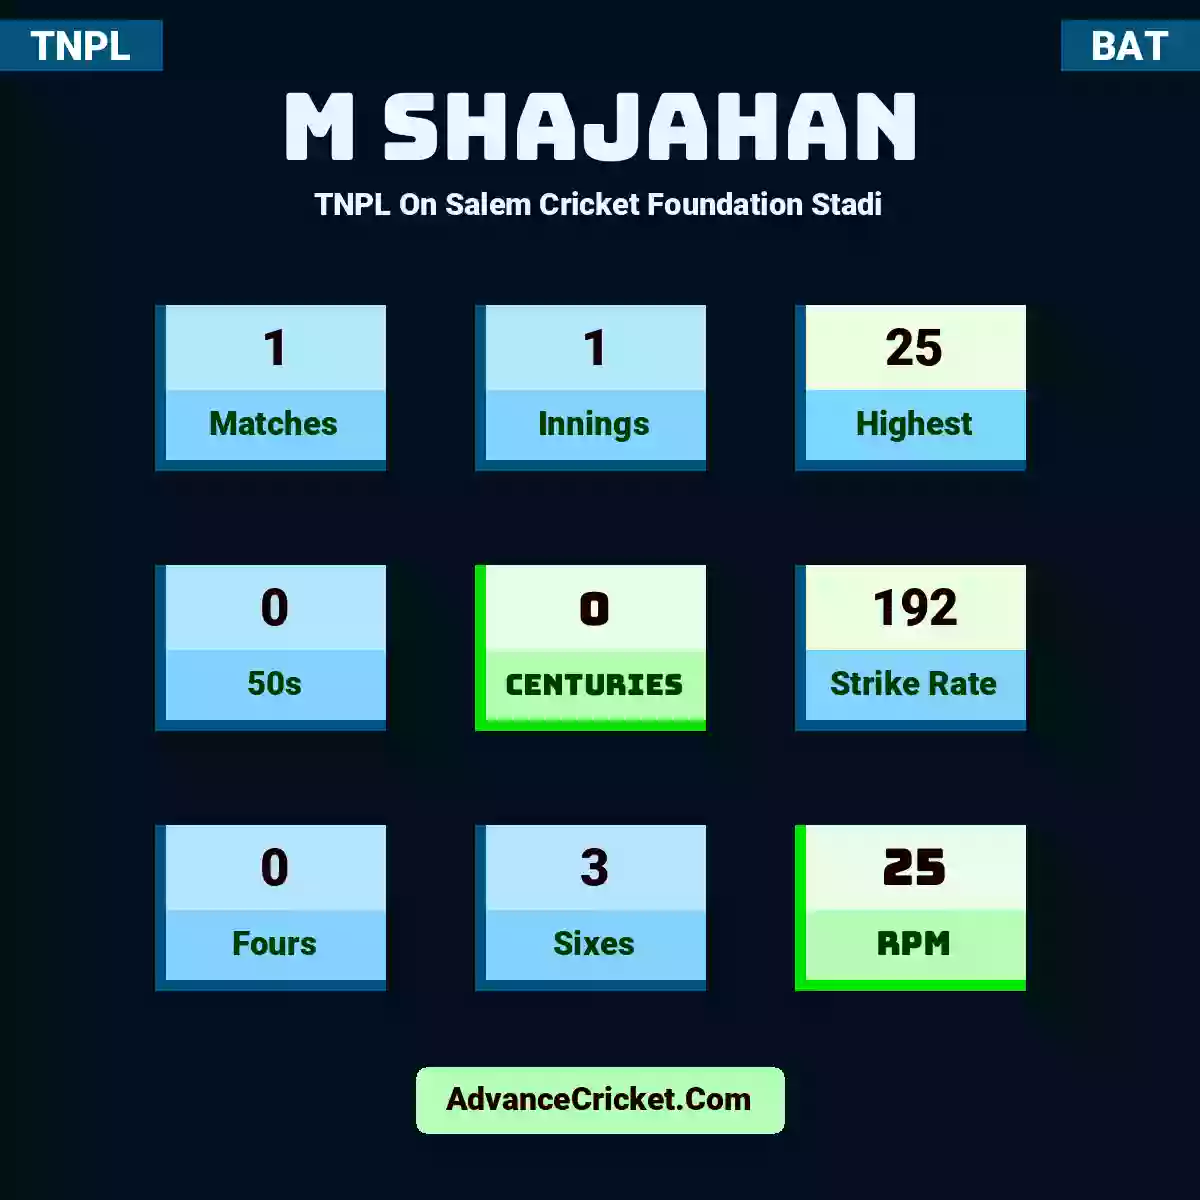 M Shajahan TNPL  On Salem Cricket Foundation Stadi, M Shajahan played 1 matches, scored 25 runs as highest, 0 half-centuries, and 0 centuries, with a strike rate of 192. M.Shajahan hit 0 fours and 3 sixes, with an RPM of 25.